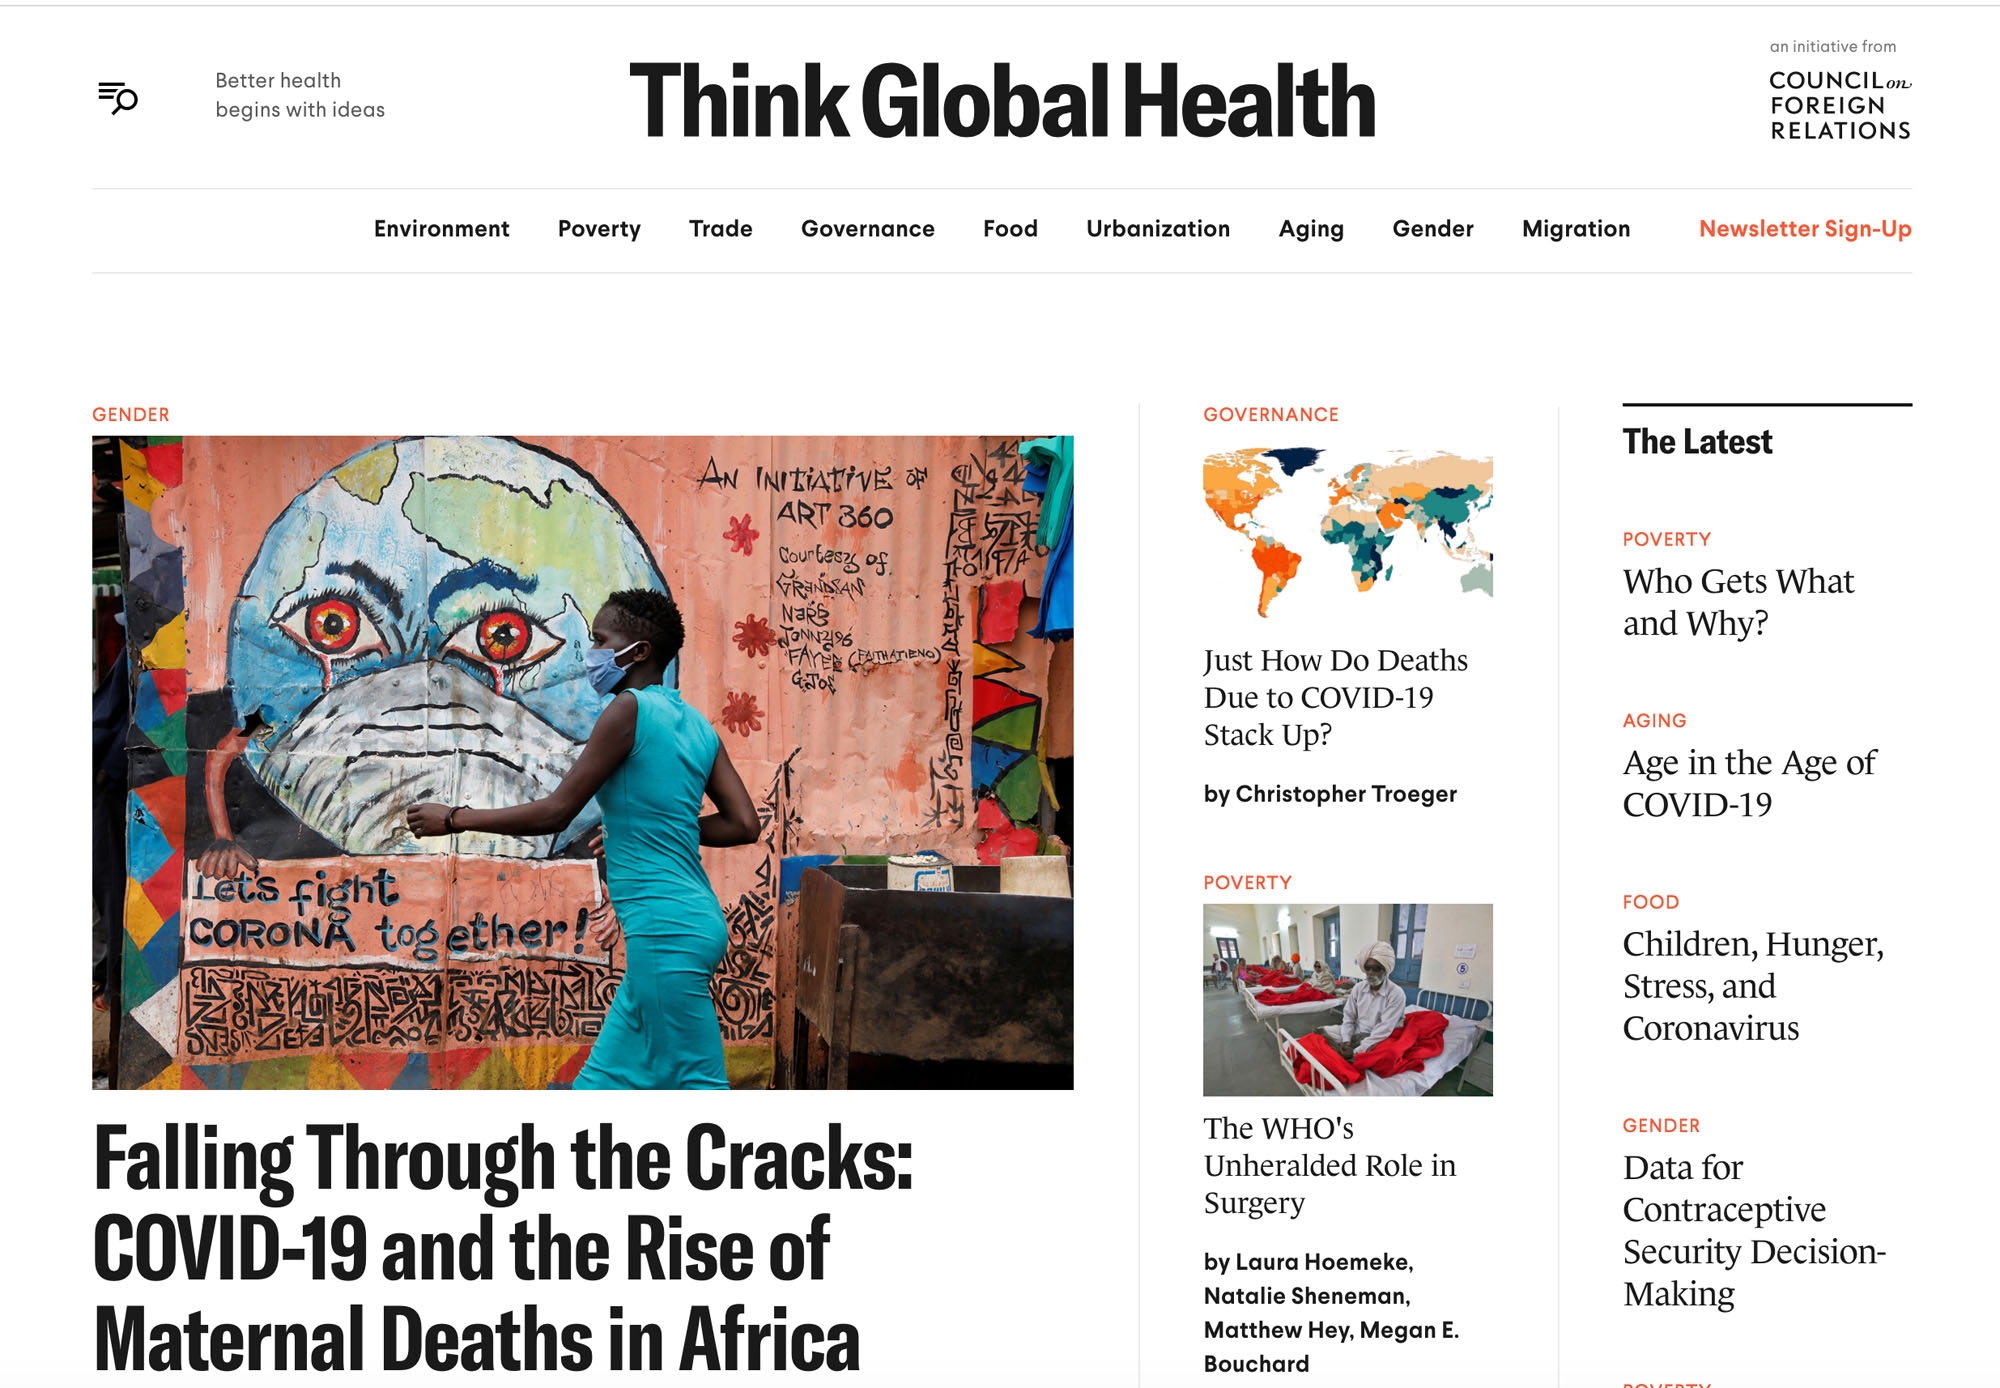 CFR introduces <a href='https://www.thinkglobalhealth.org/' class='linktext' target='_blank'>
Think Global Health</a>,